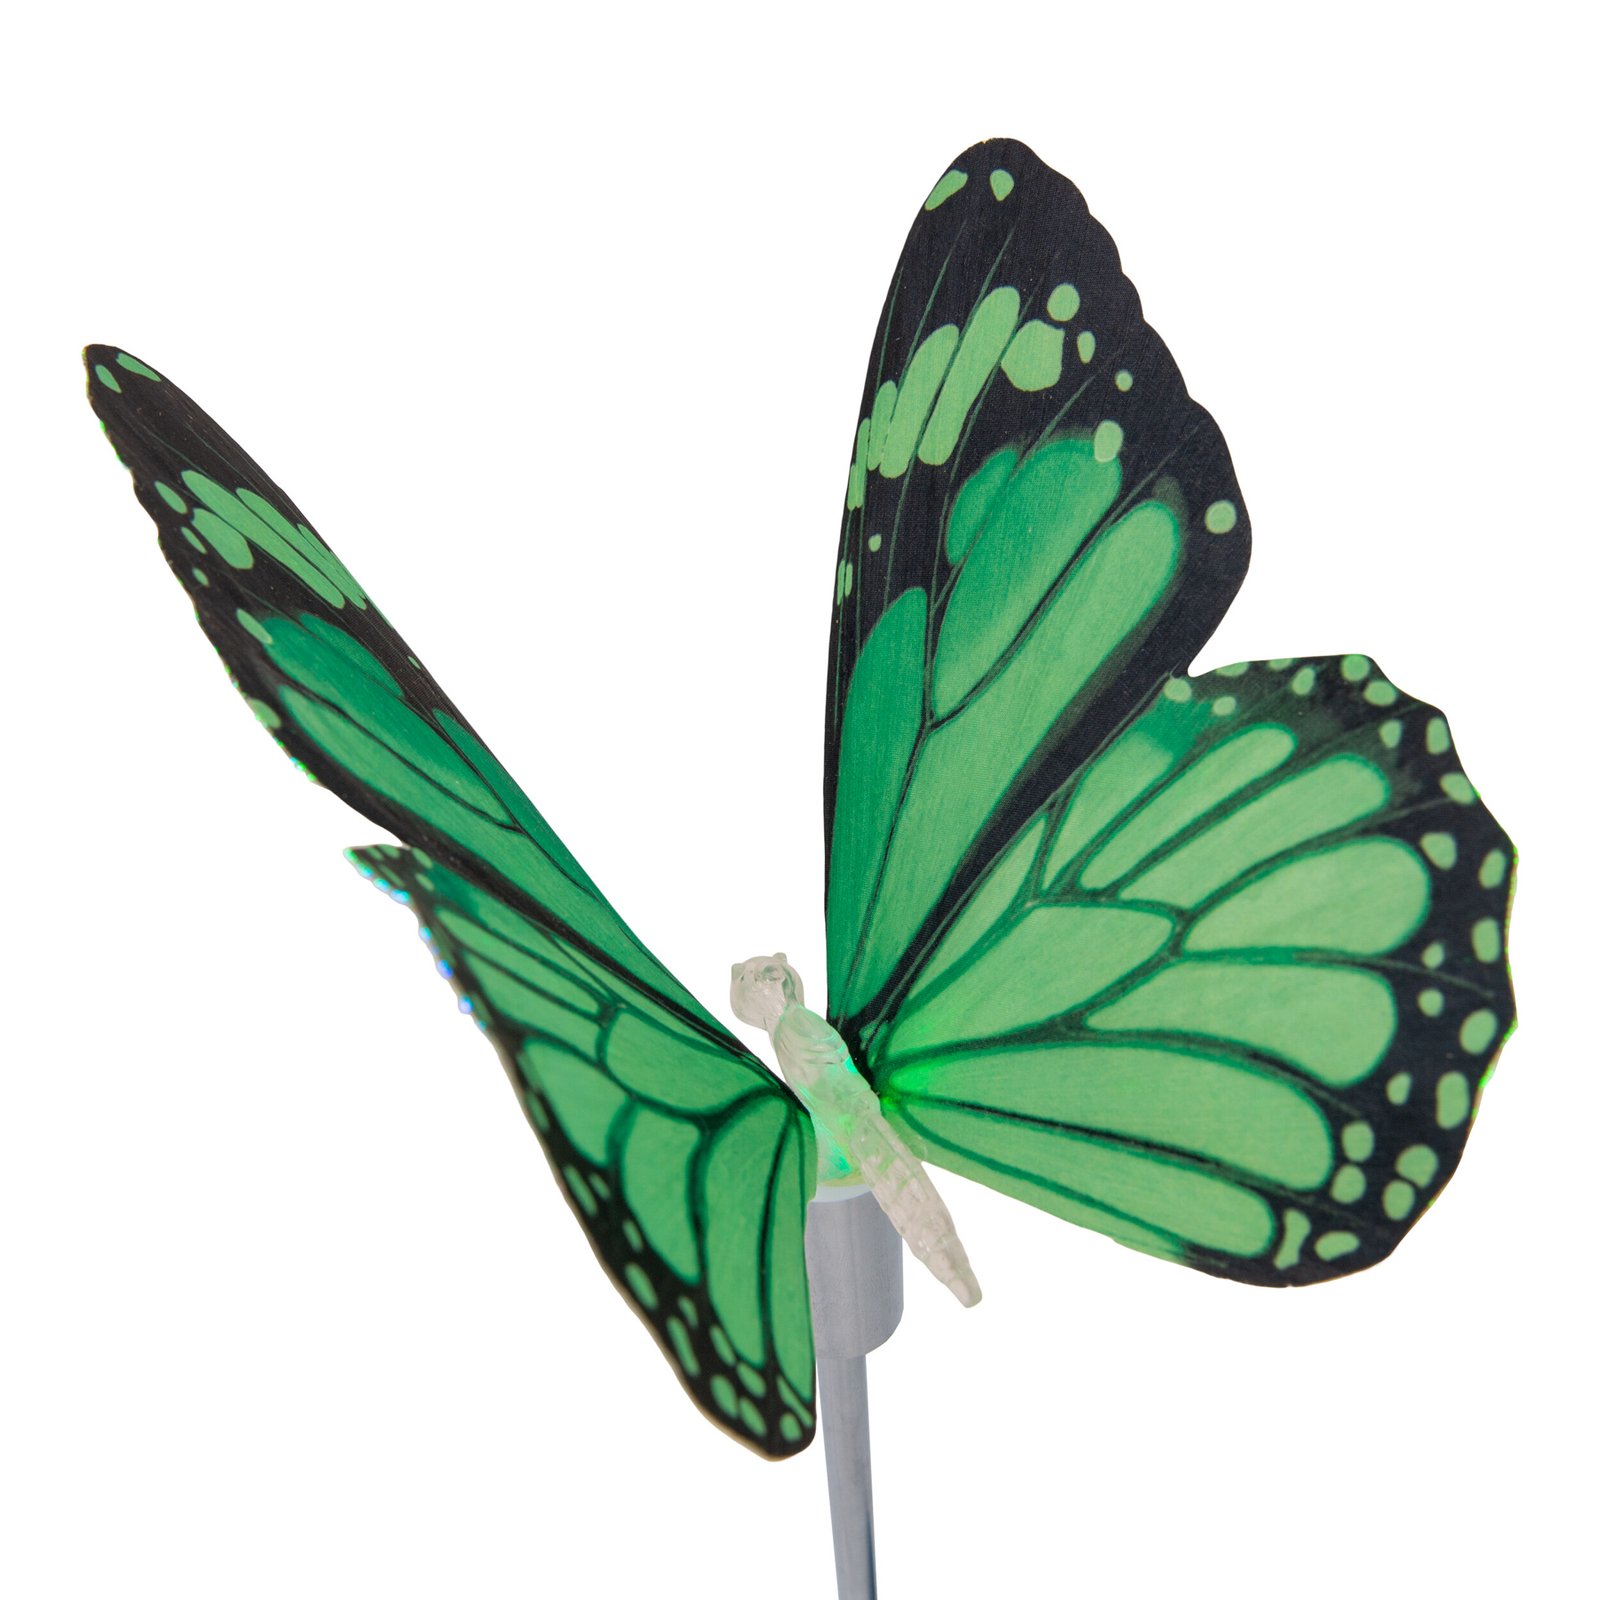 Deco-solcellelys sommerfugl, jordspyd, RGB LED